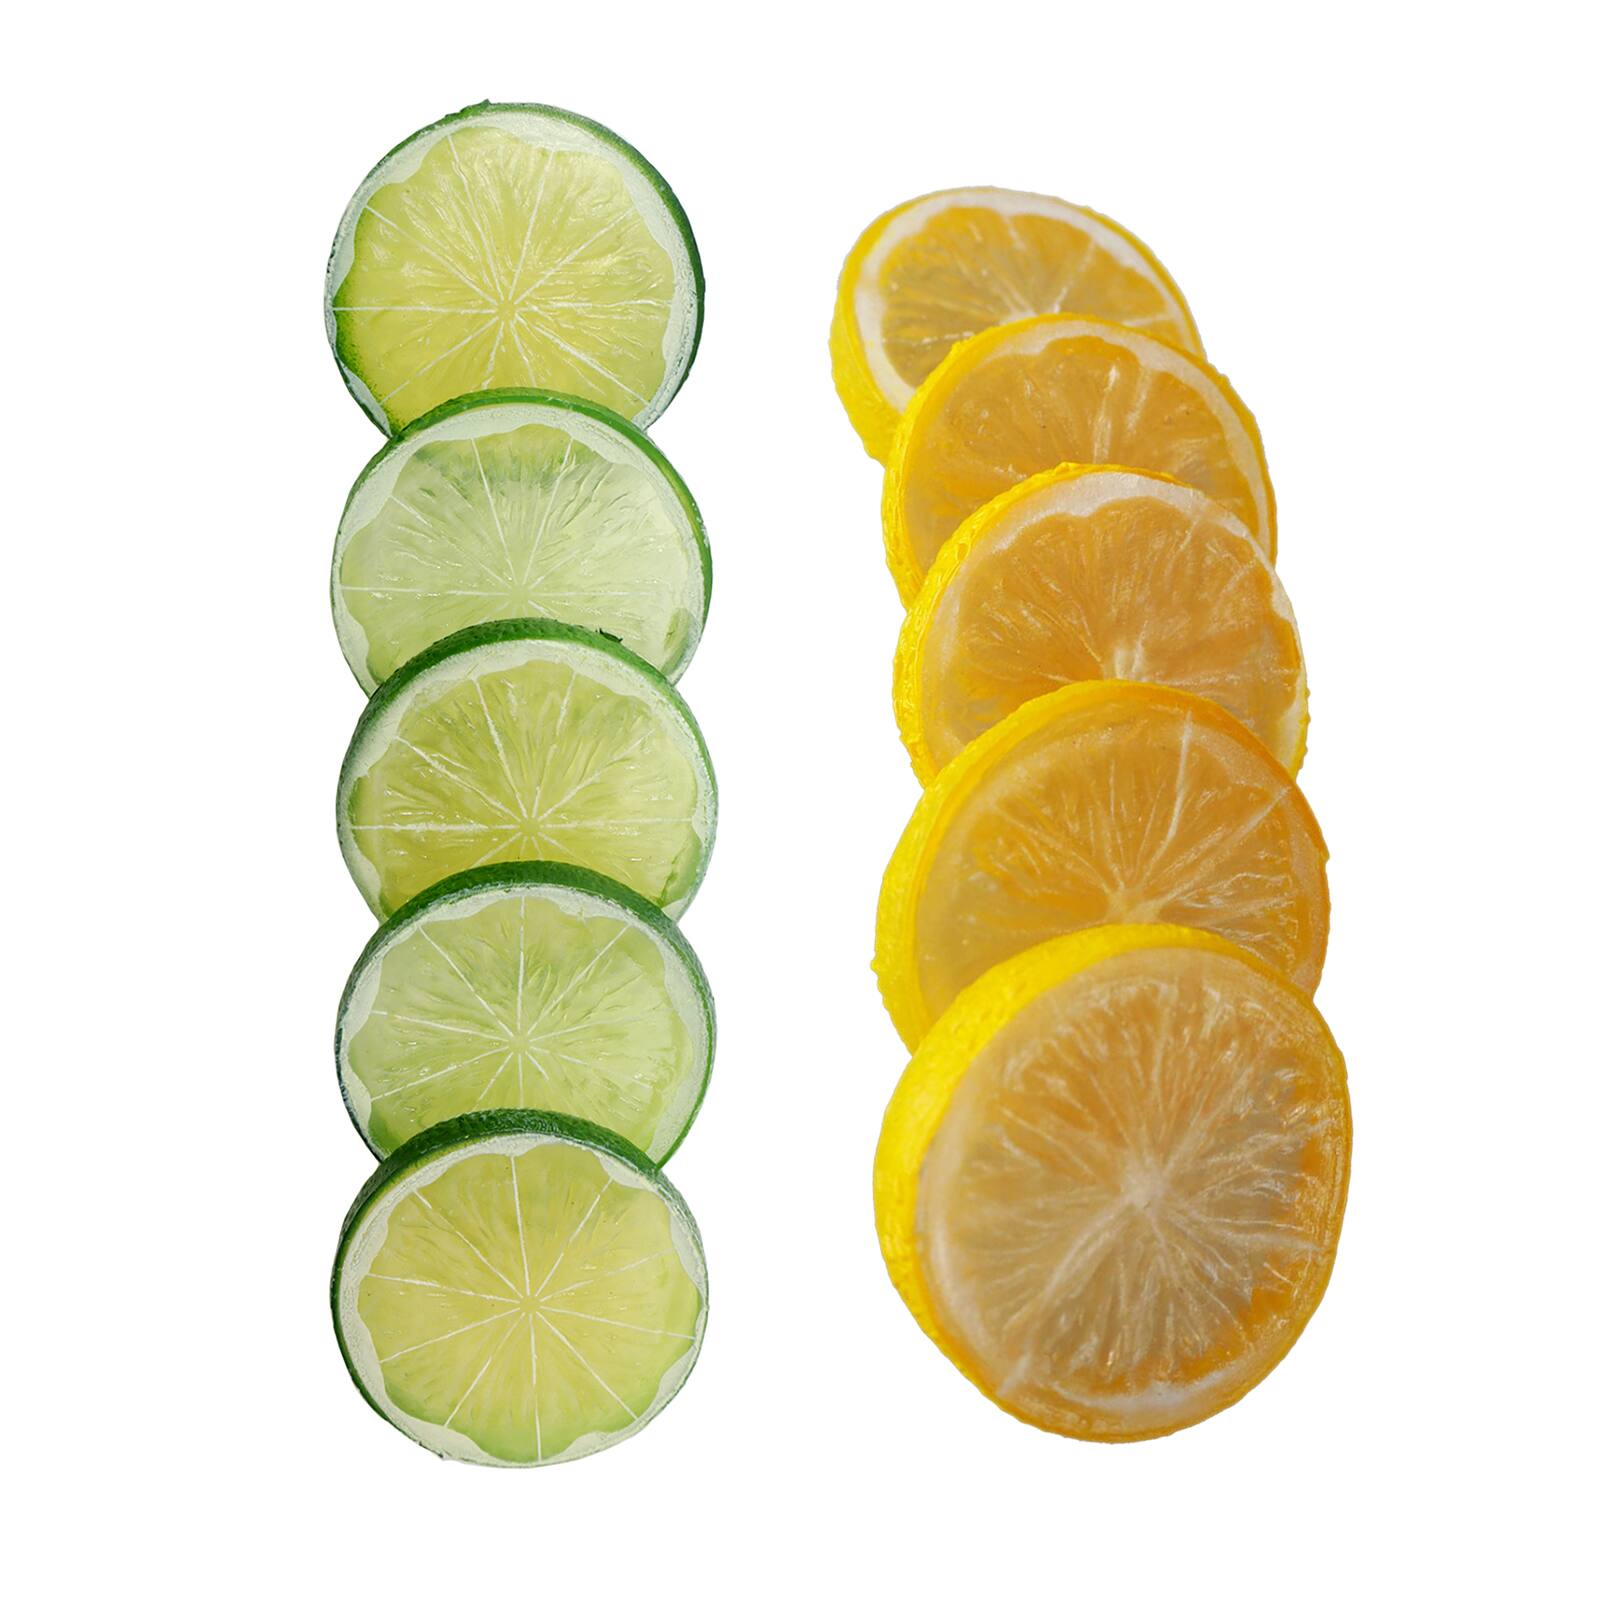 Lemon Slices Artificial Lemon Slices Fake Fruit Tiered Tray Home Decor Set of 5 